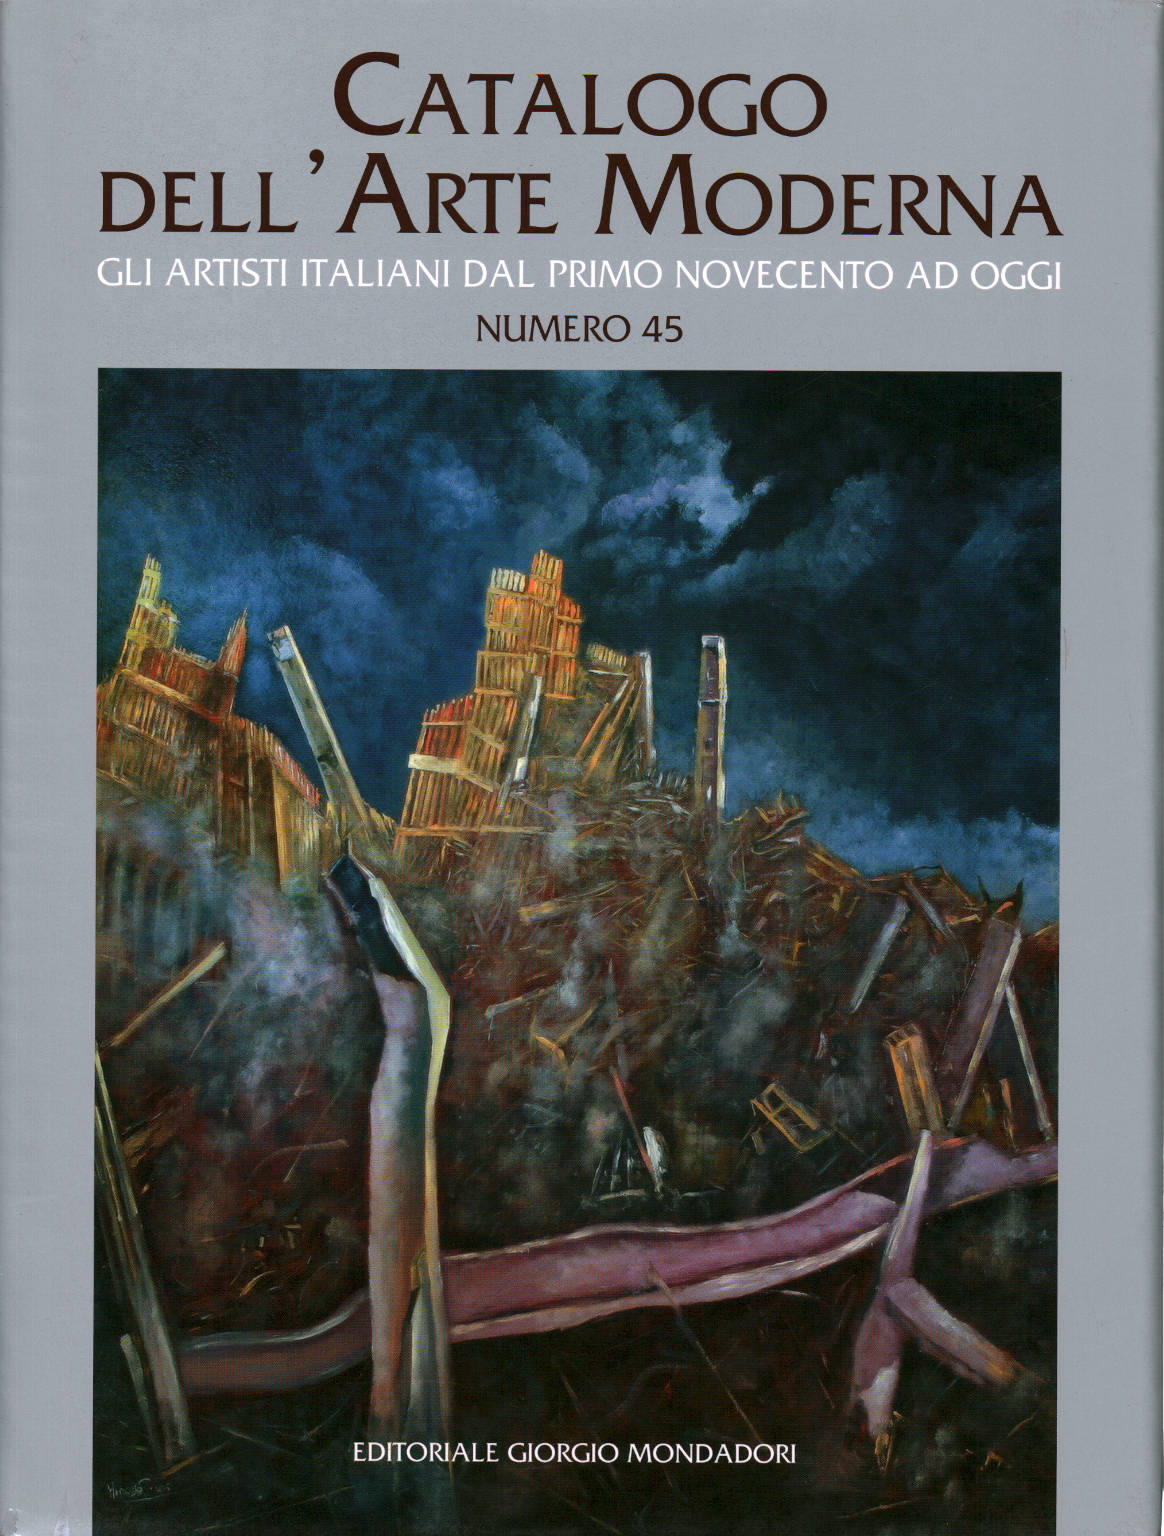 Catalog of Modern Art Italy